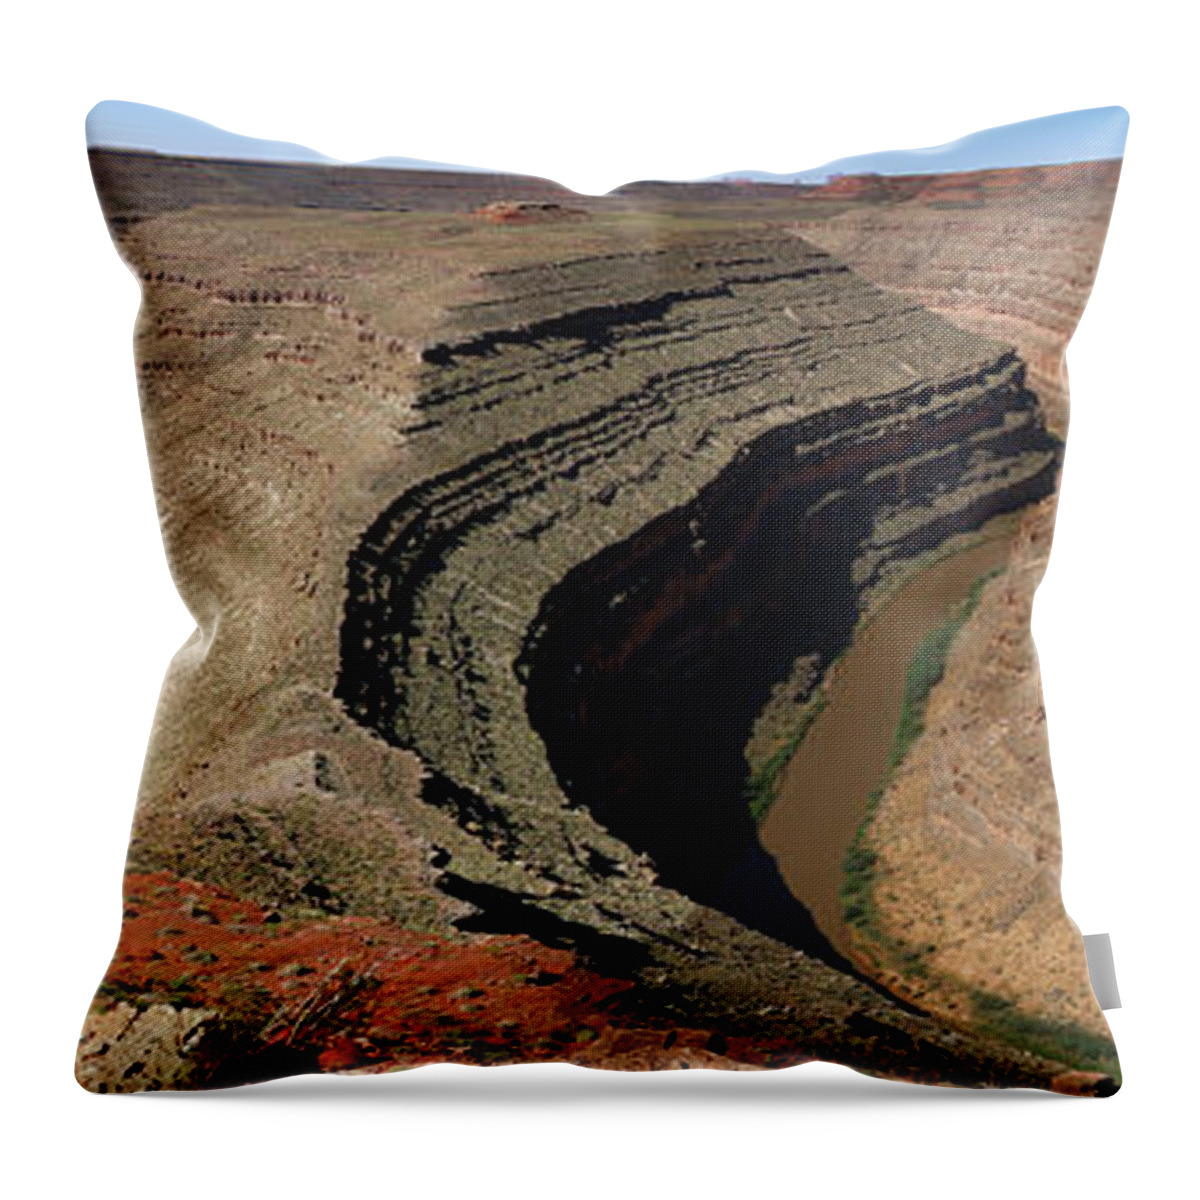  Goosenecks Throw Pillow featuring the photograph The Goosnecks - A Meander Of The San Juan River by Christiane Schulze Art And Photography